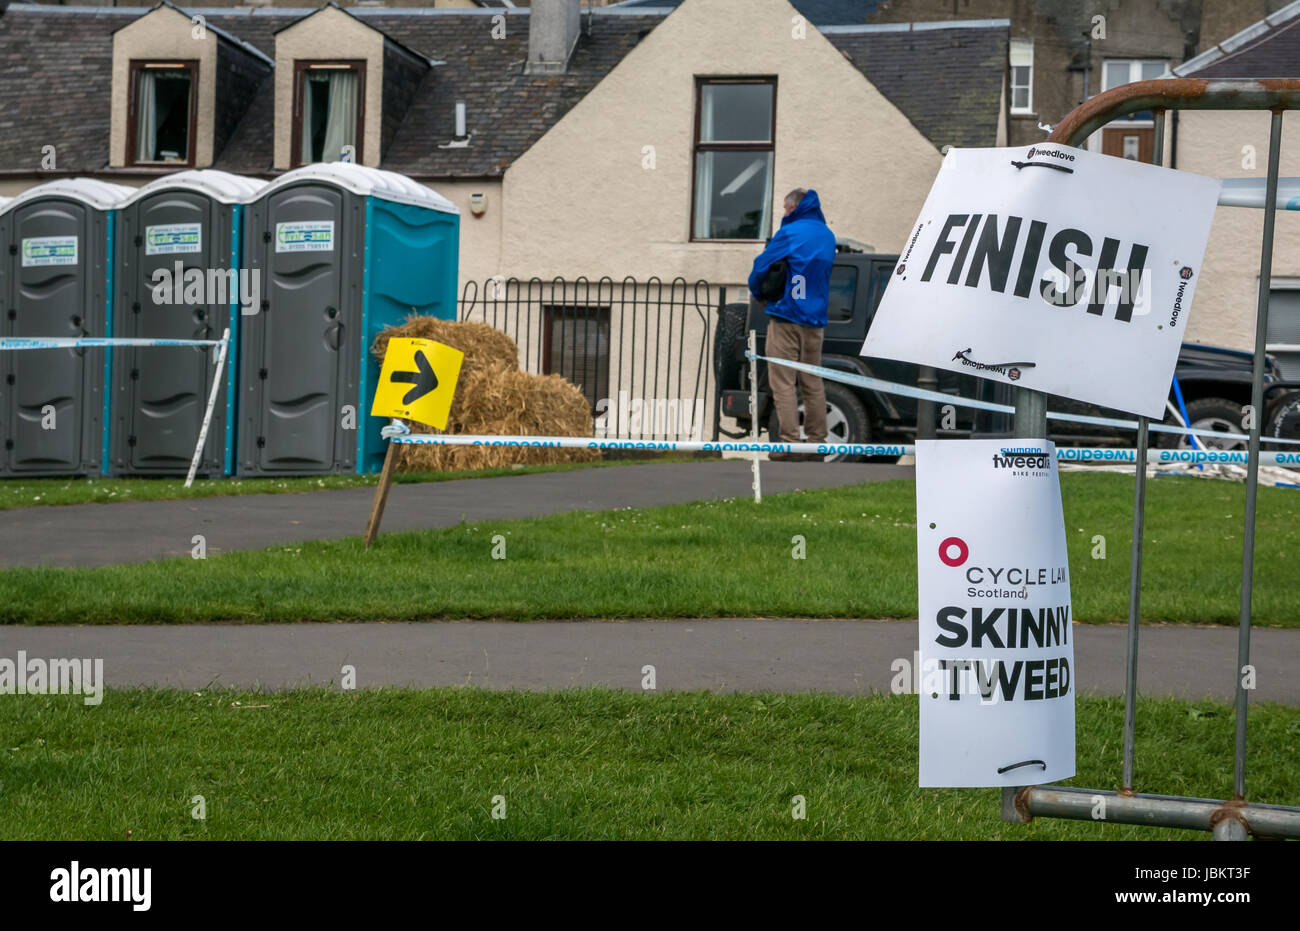 Finish line, Skinny Tweed Tweedlove long distance cycling event 2017, Peebles, Scottish Borders, UK Stock Photo